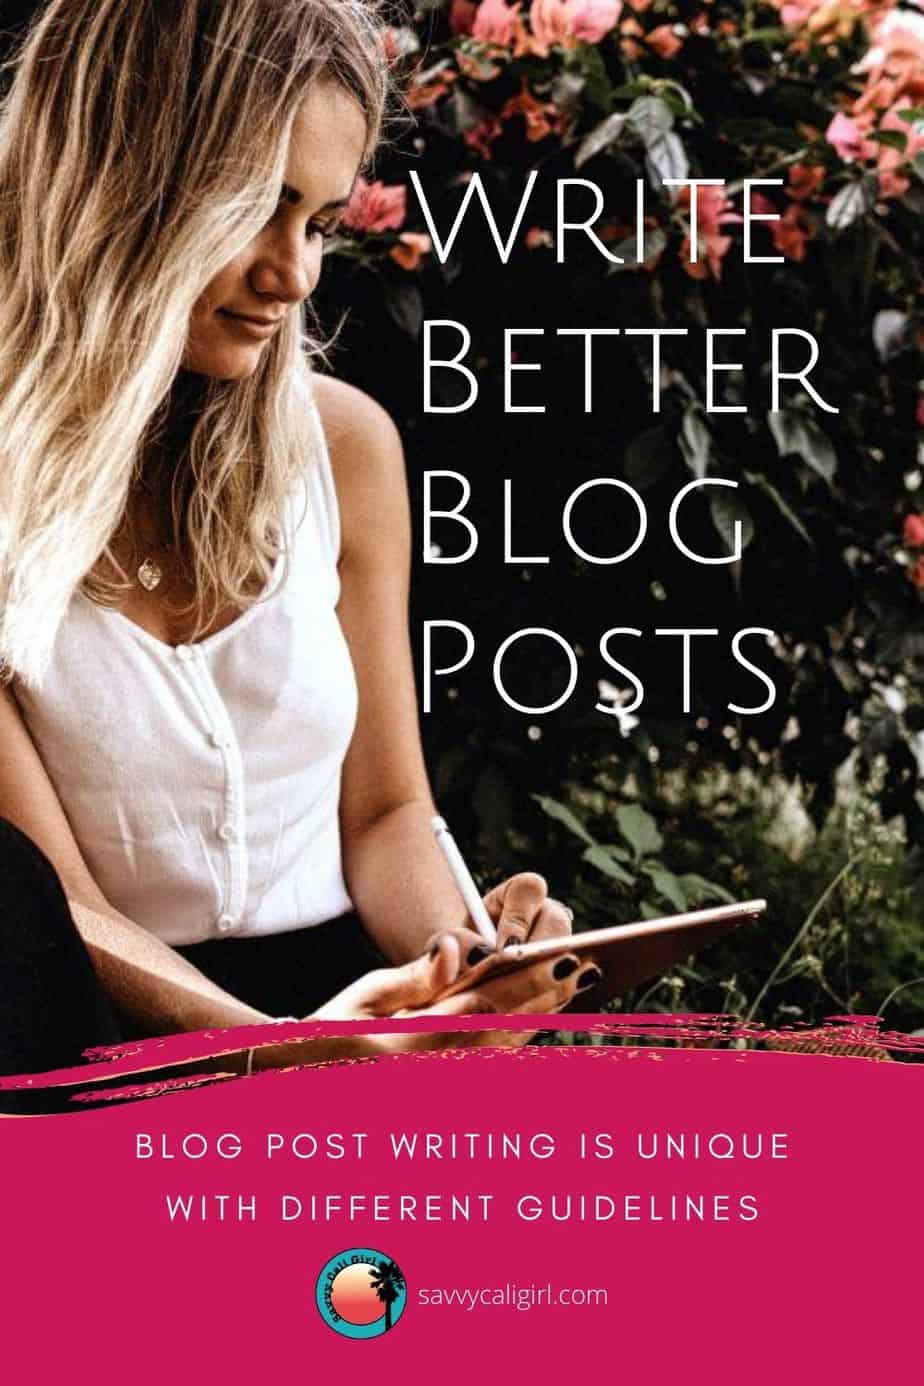 Blog Post Writing